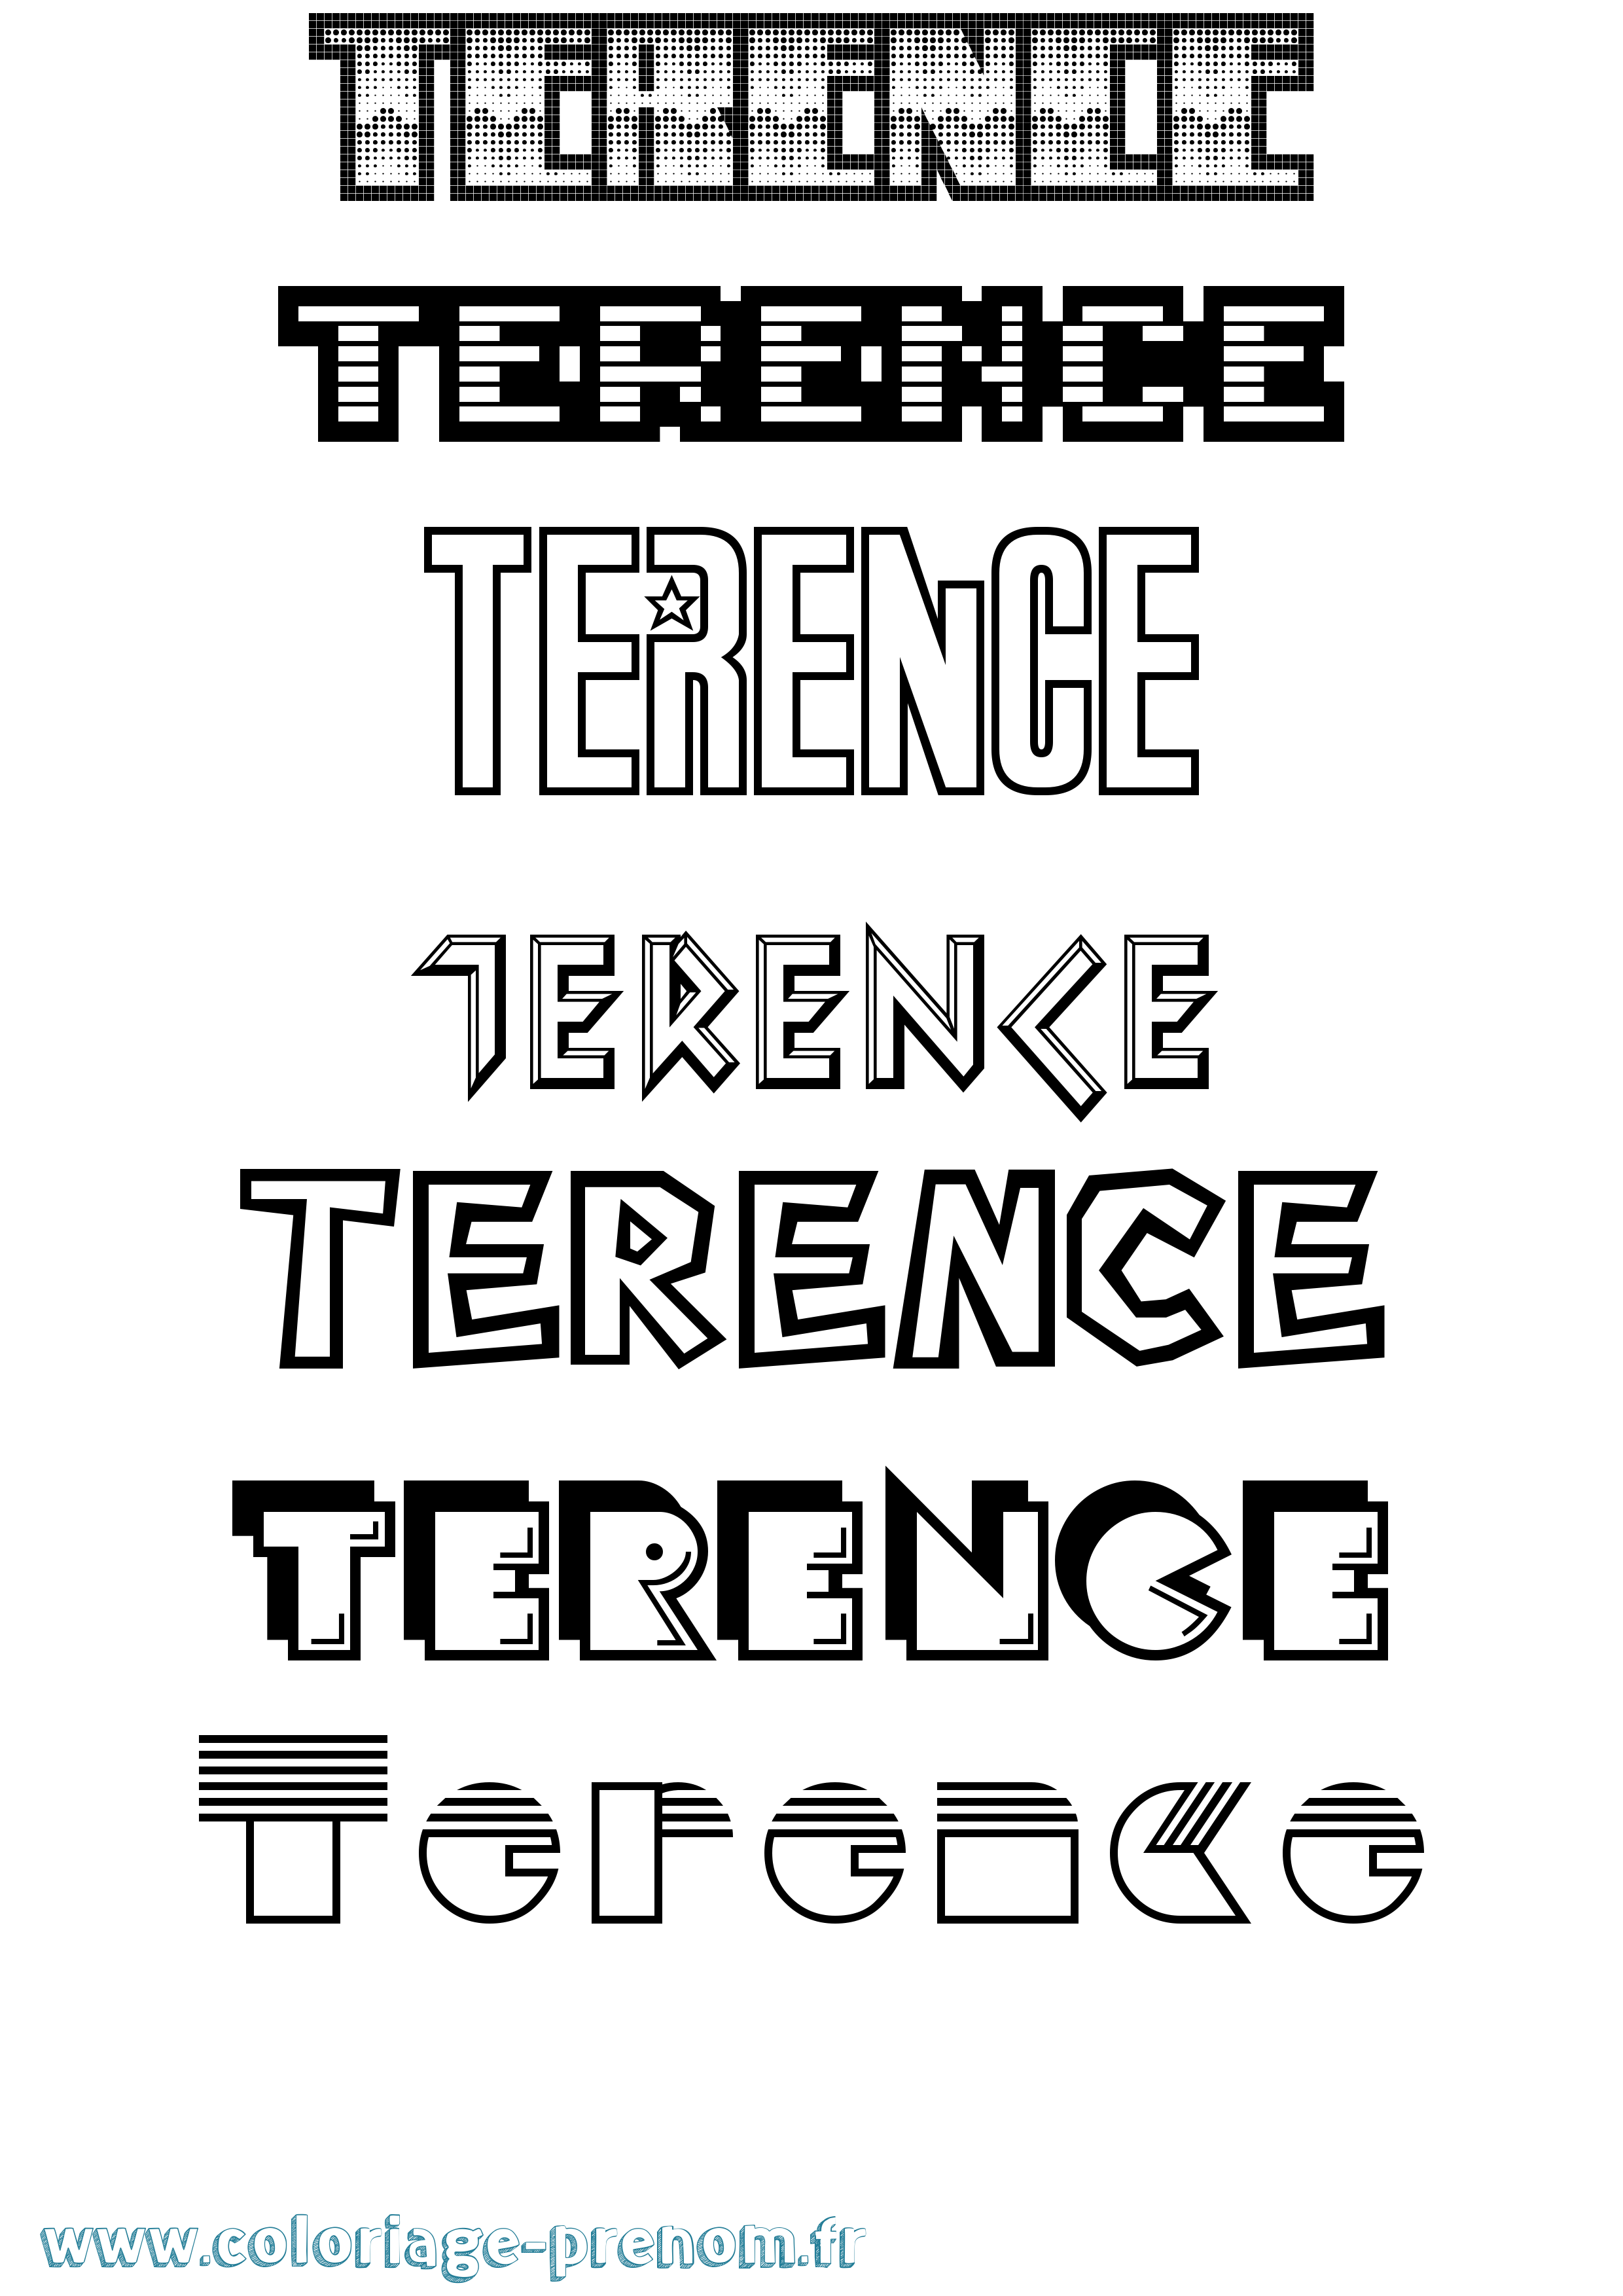 Coloriage prénom Terence